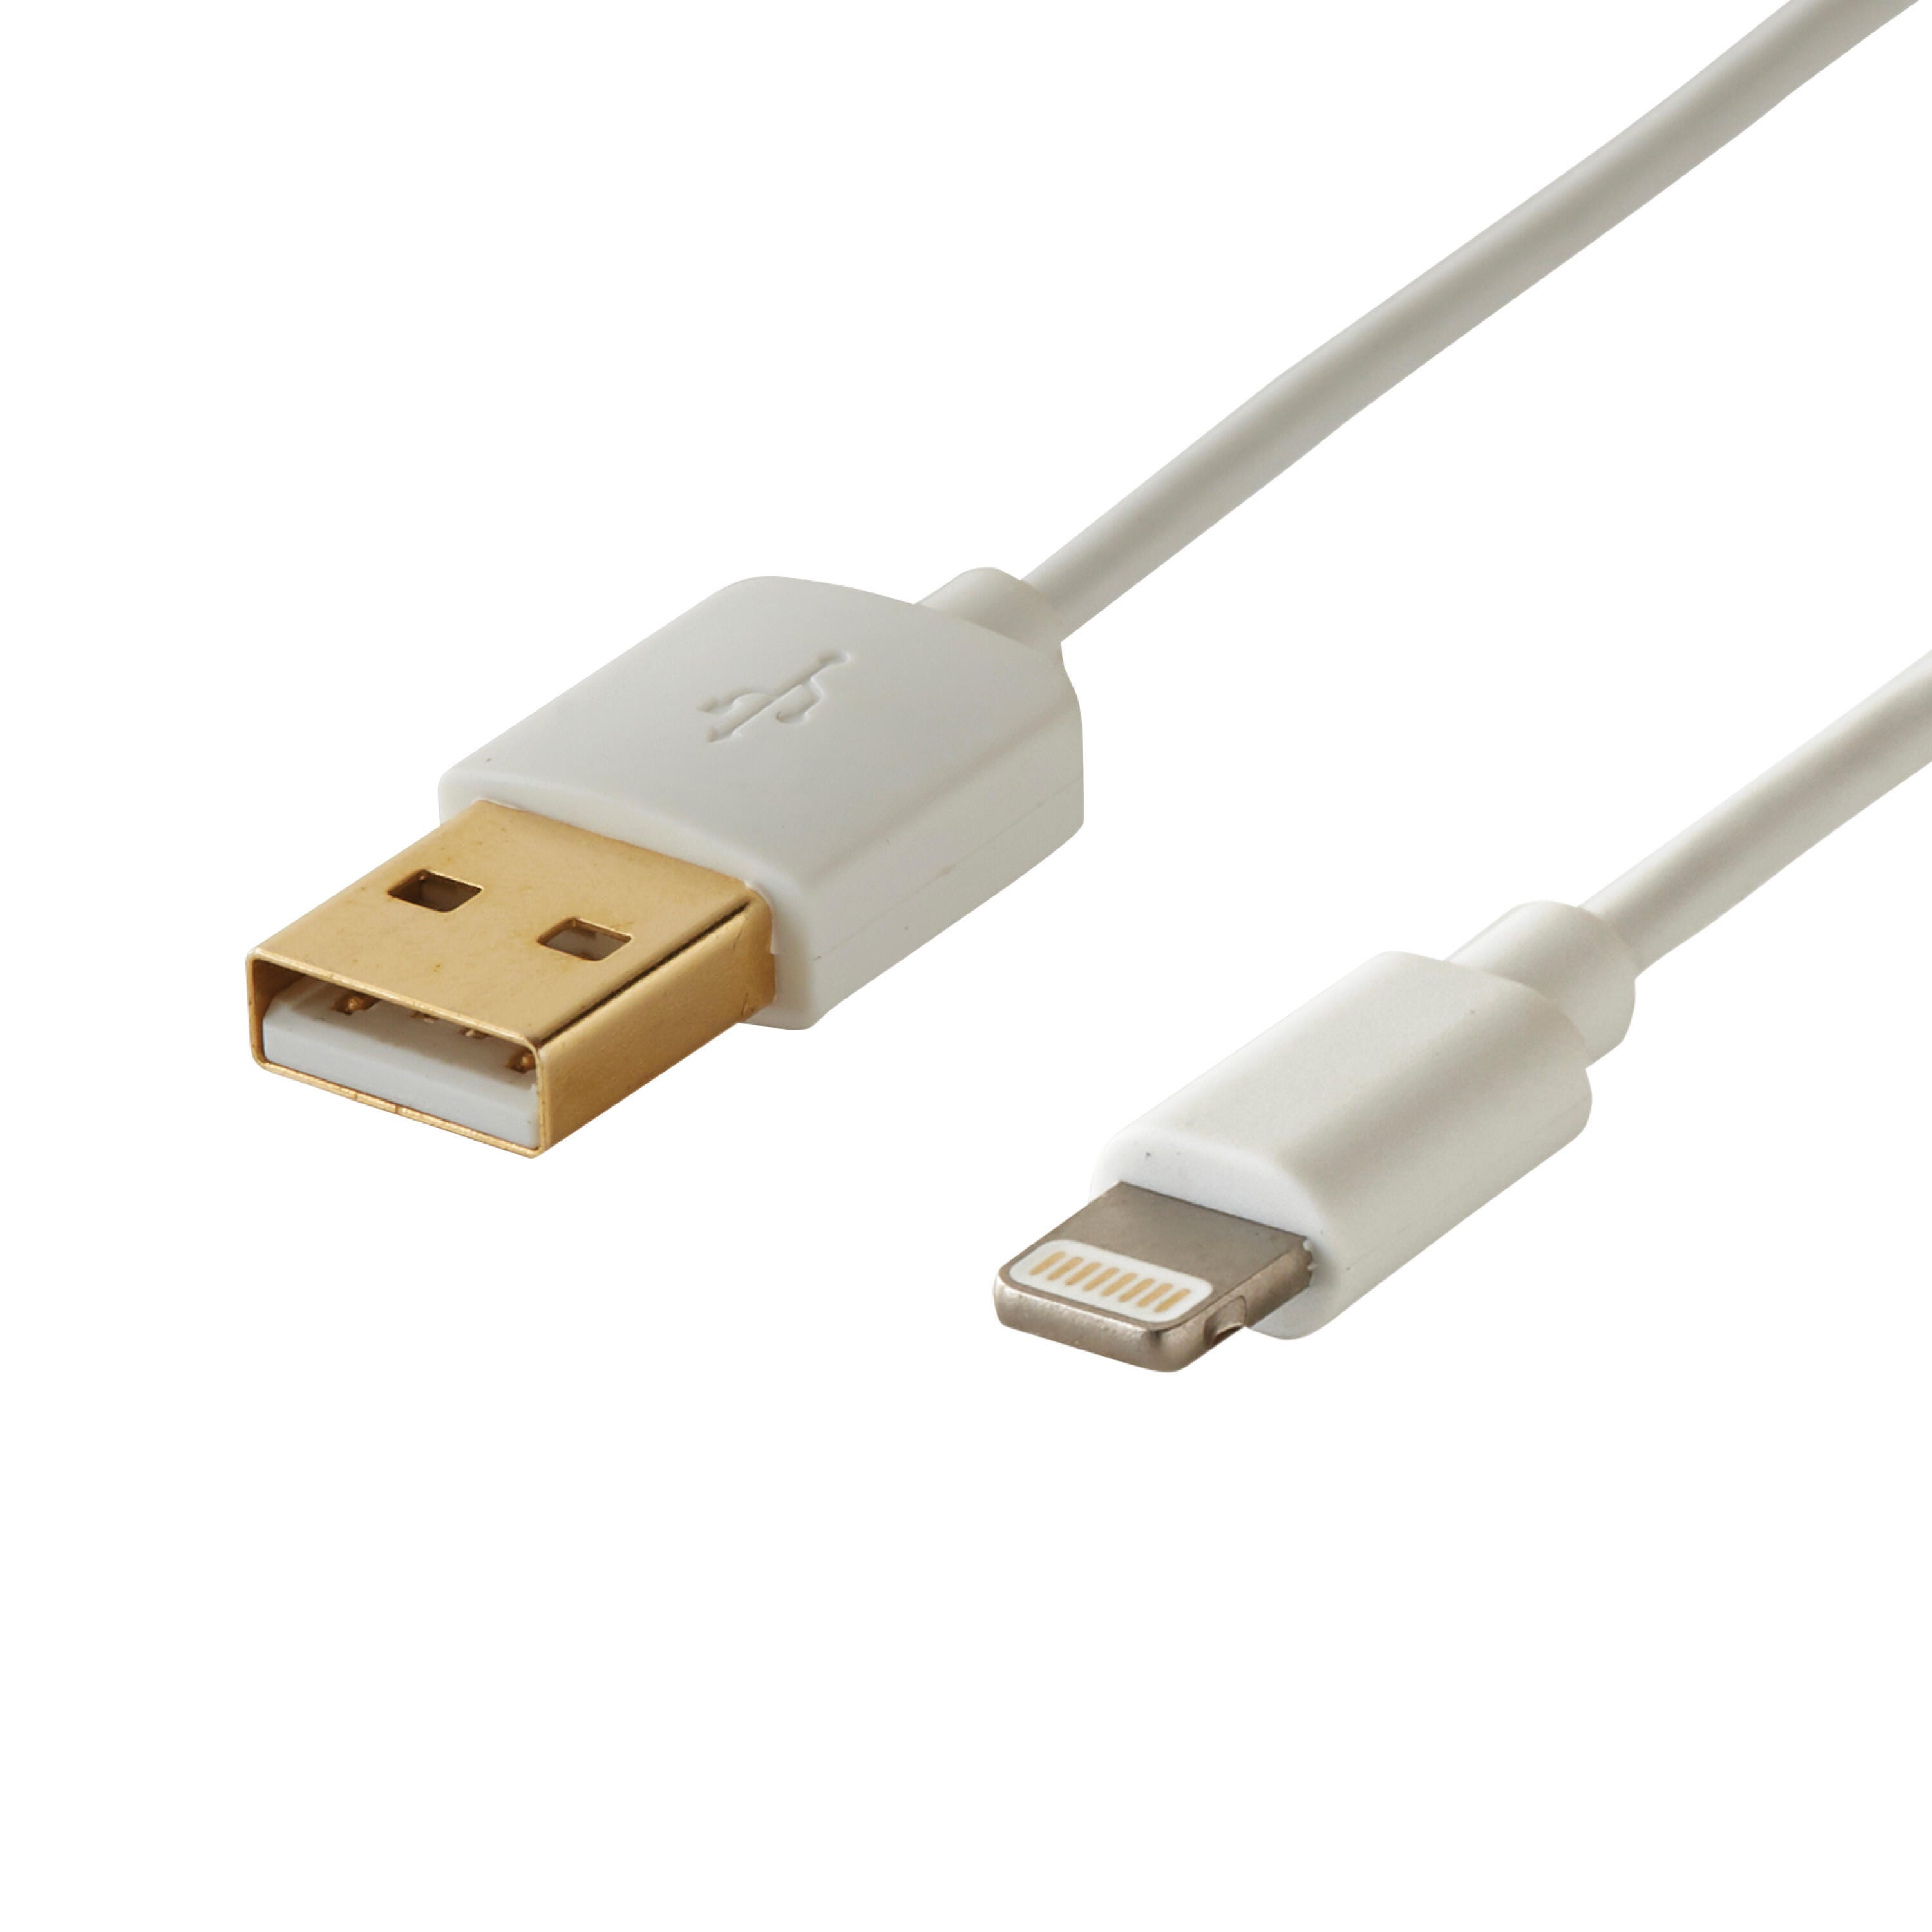 GEEK MONKEY - Chargeur secteur USB-A 2.1 + câble IPhone Lightning - 1 mètre  - Blanc